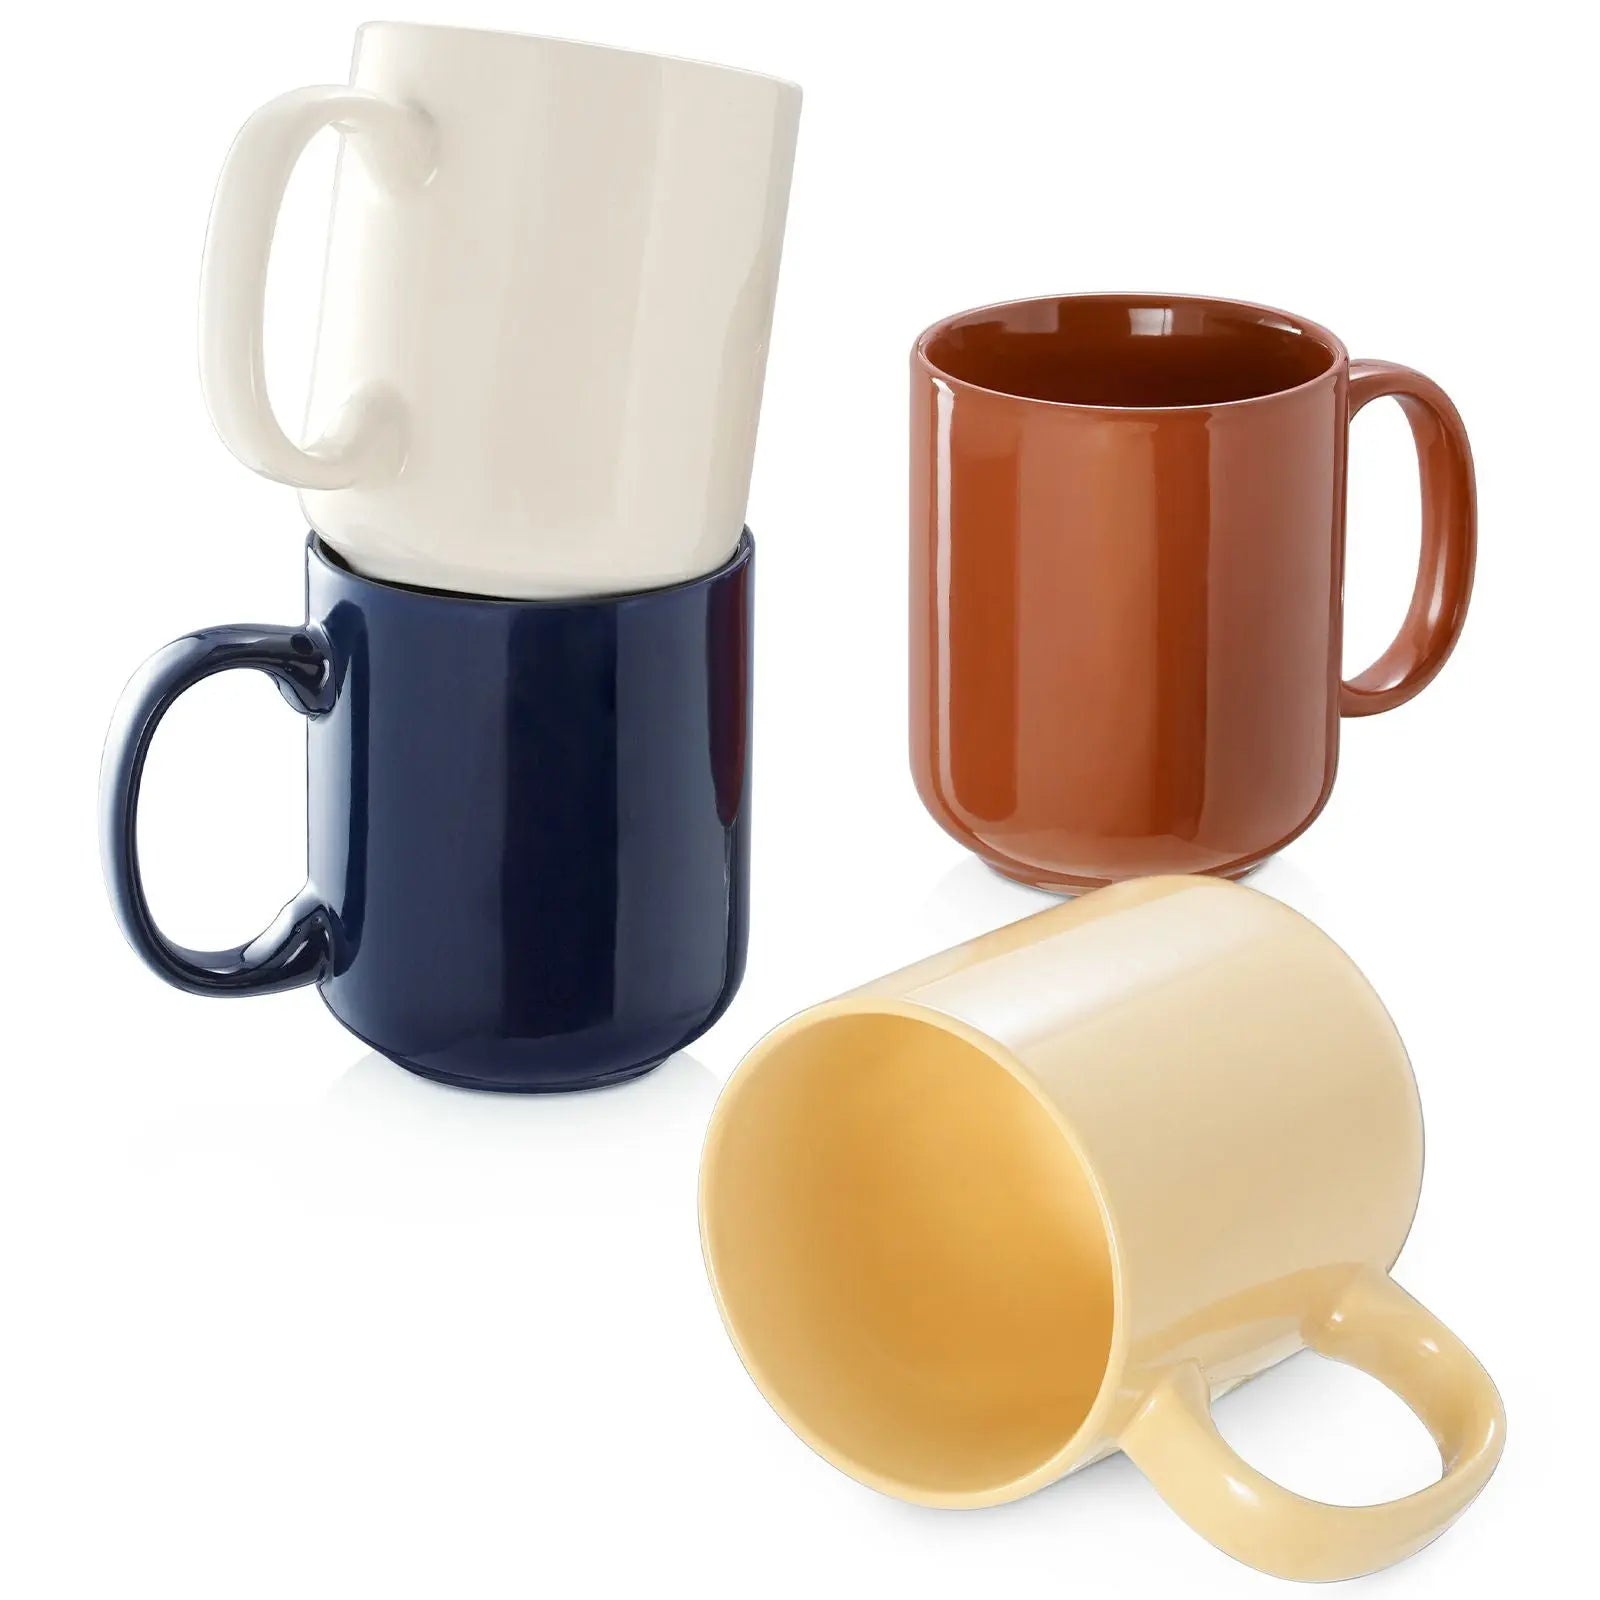 Ceramic Coffee Mug - 20 oz.